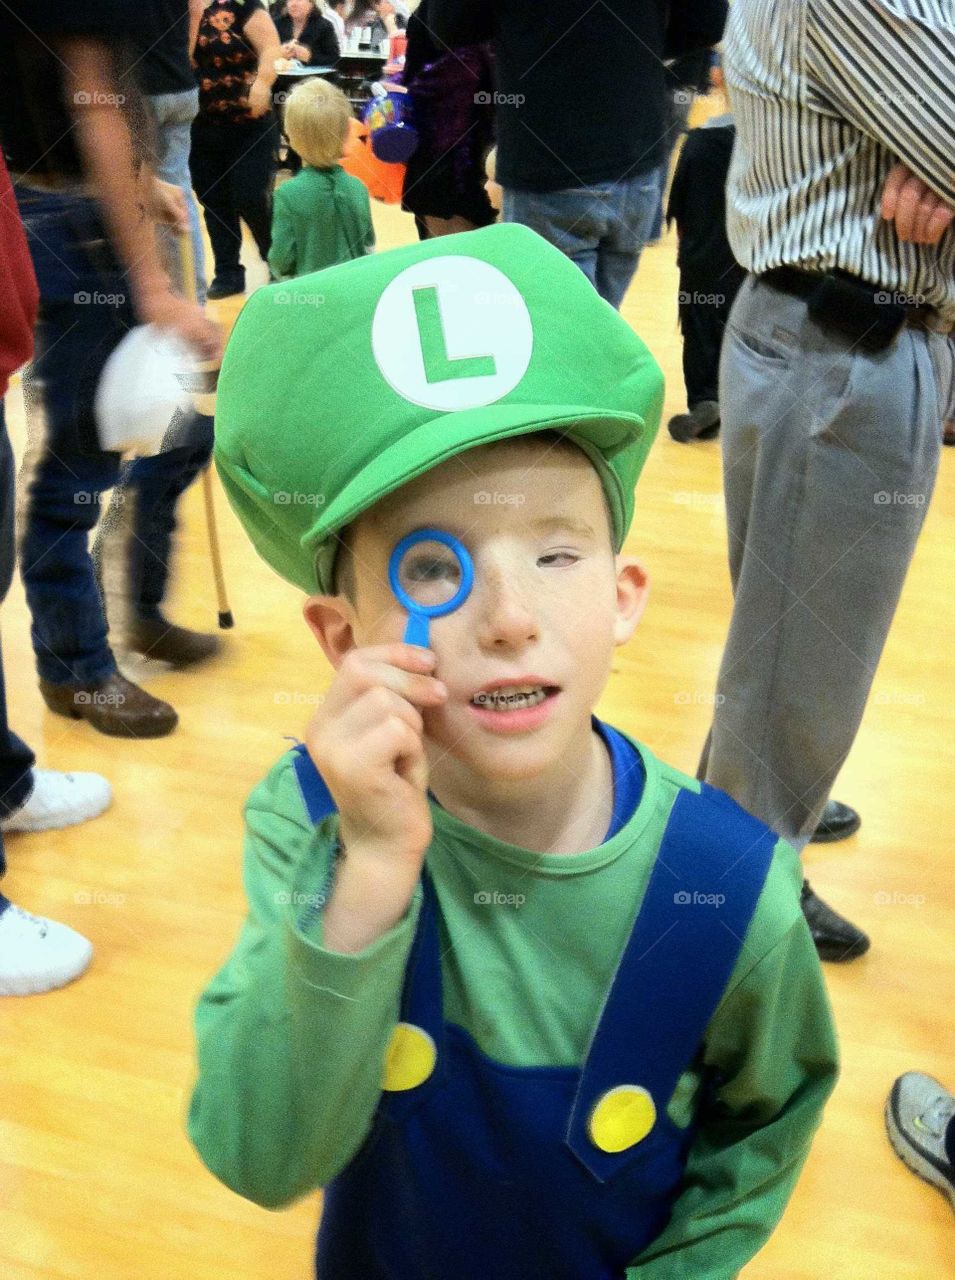 Luigi sees you/ Halloween